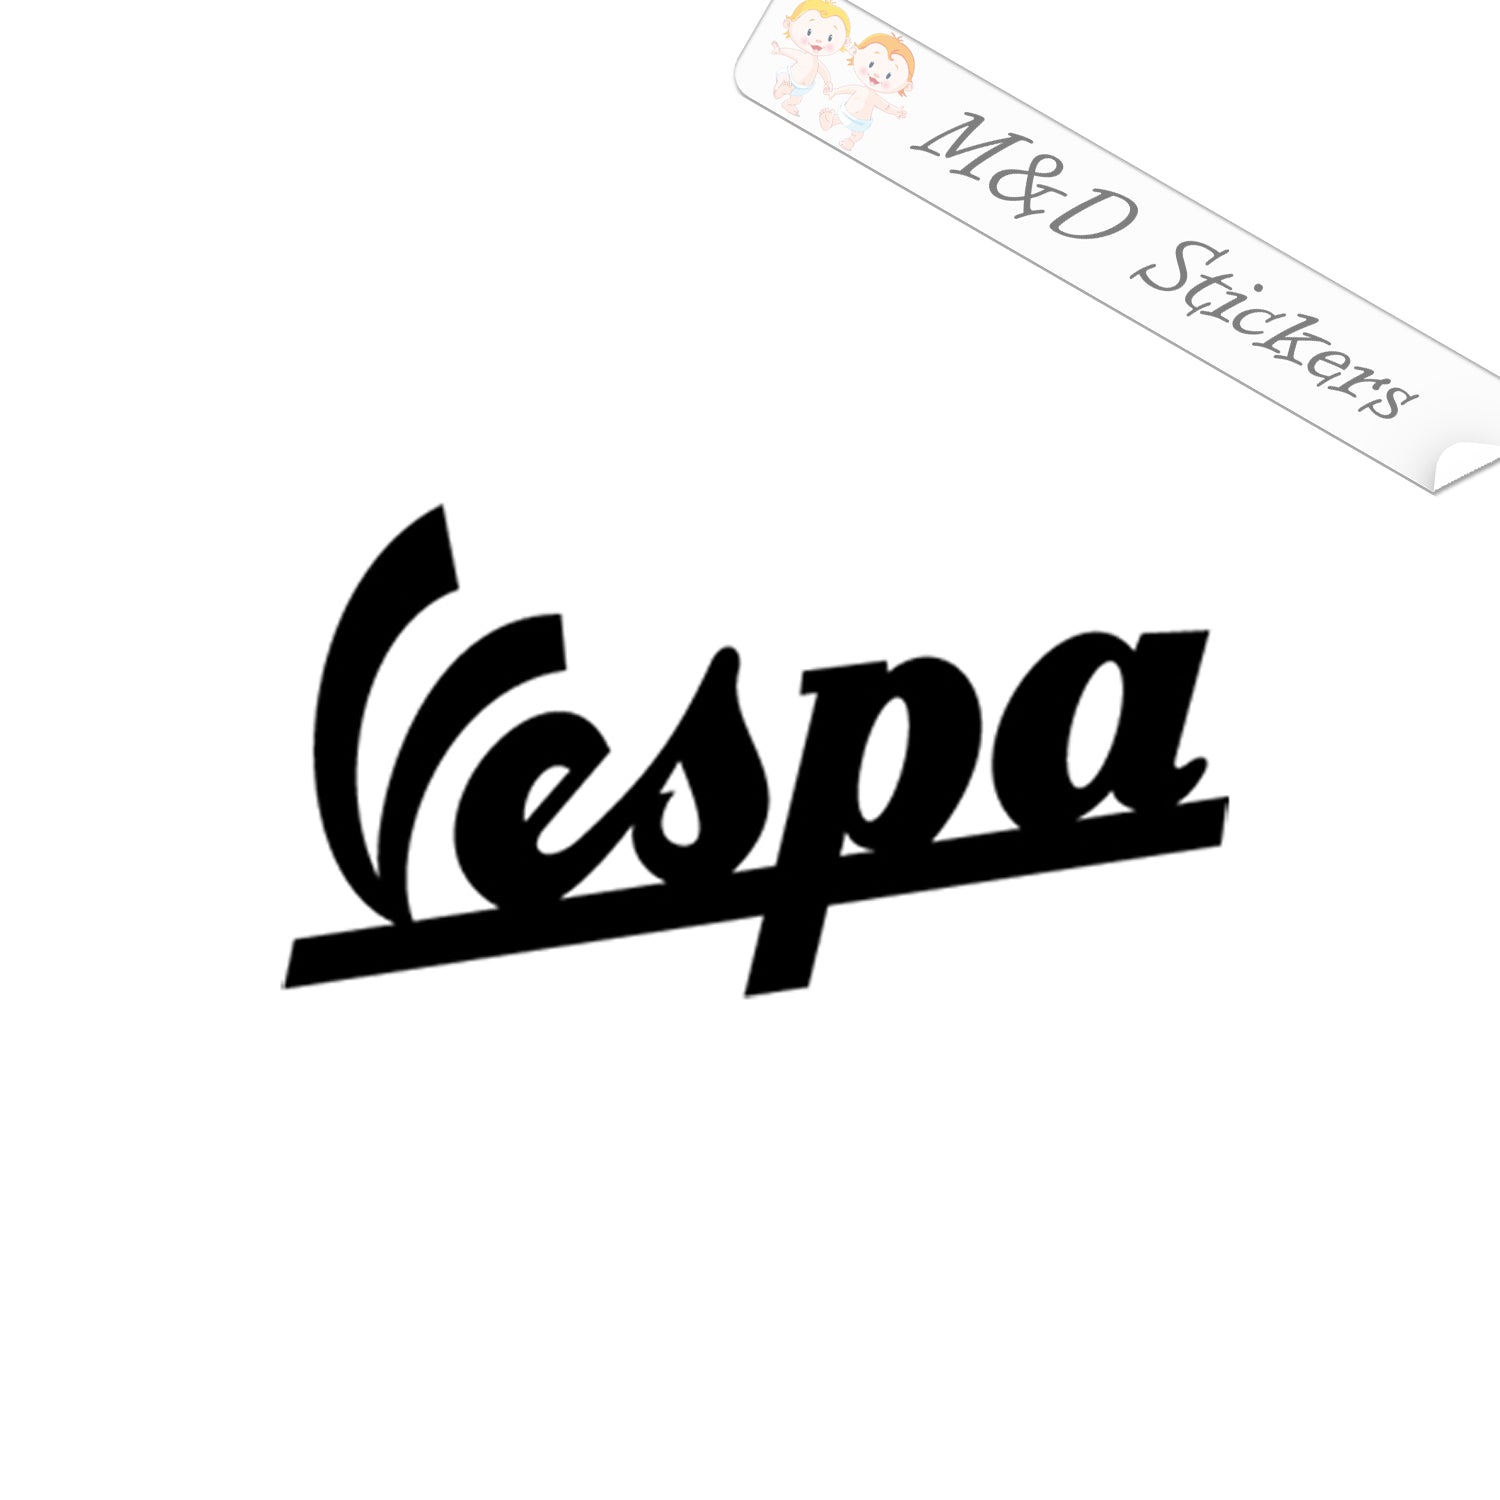 vespa logo sticker